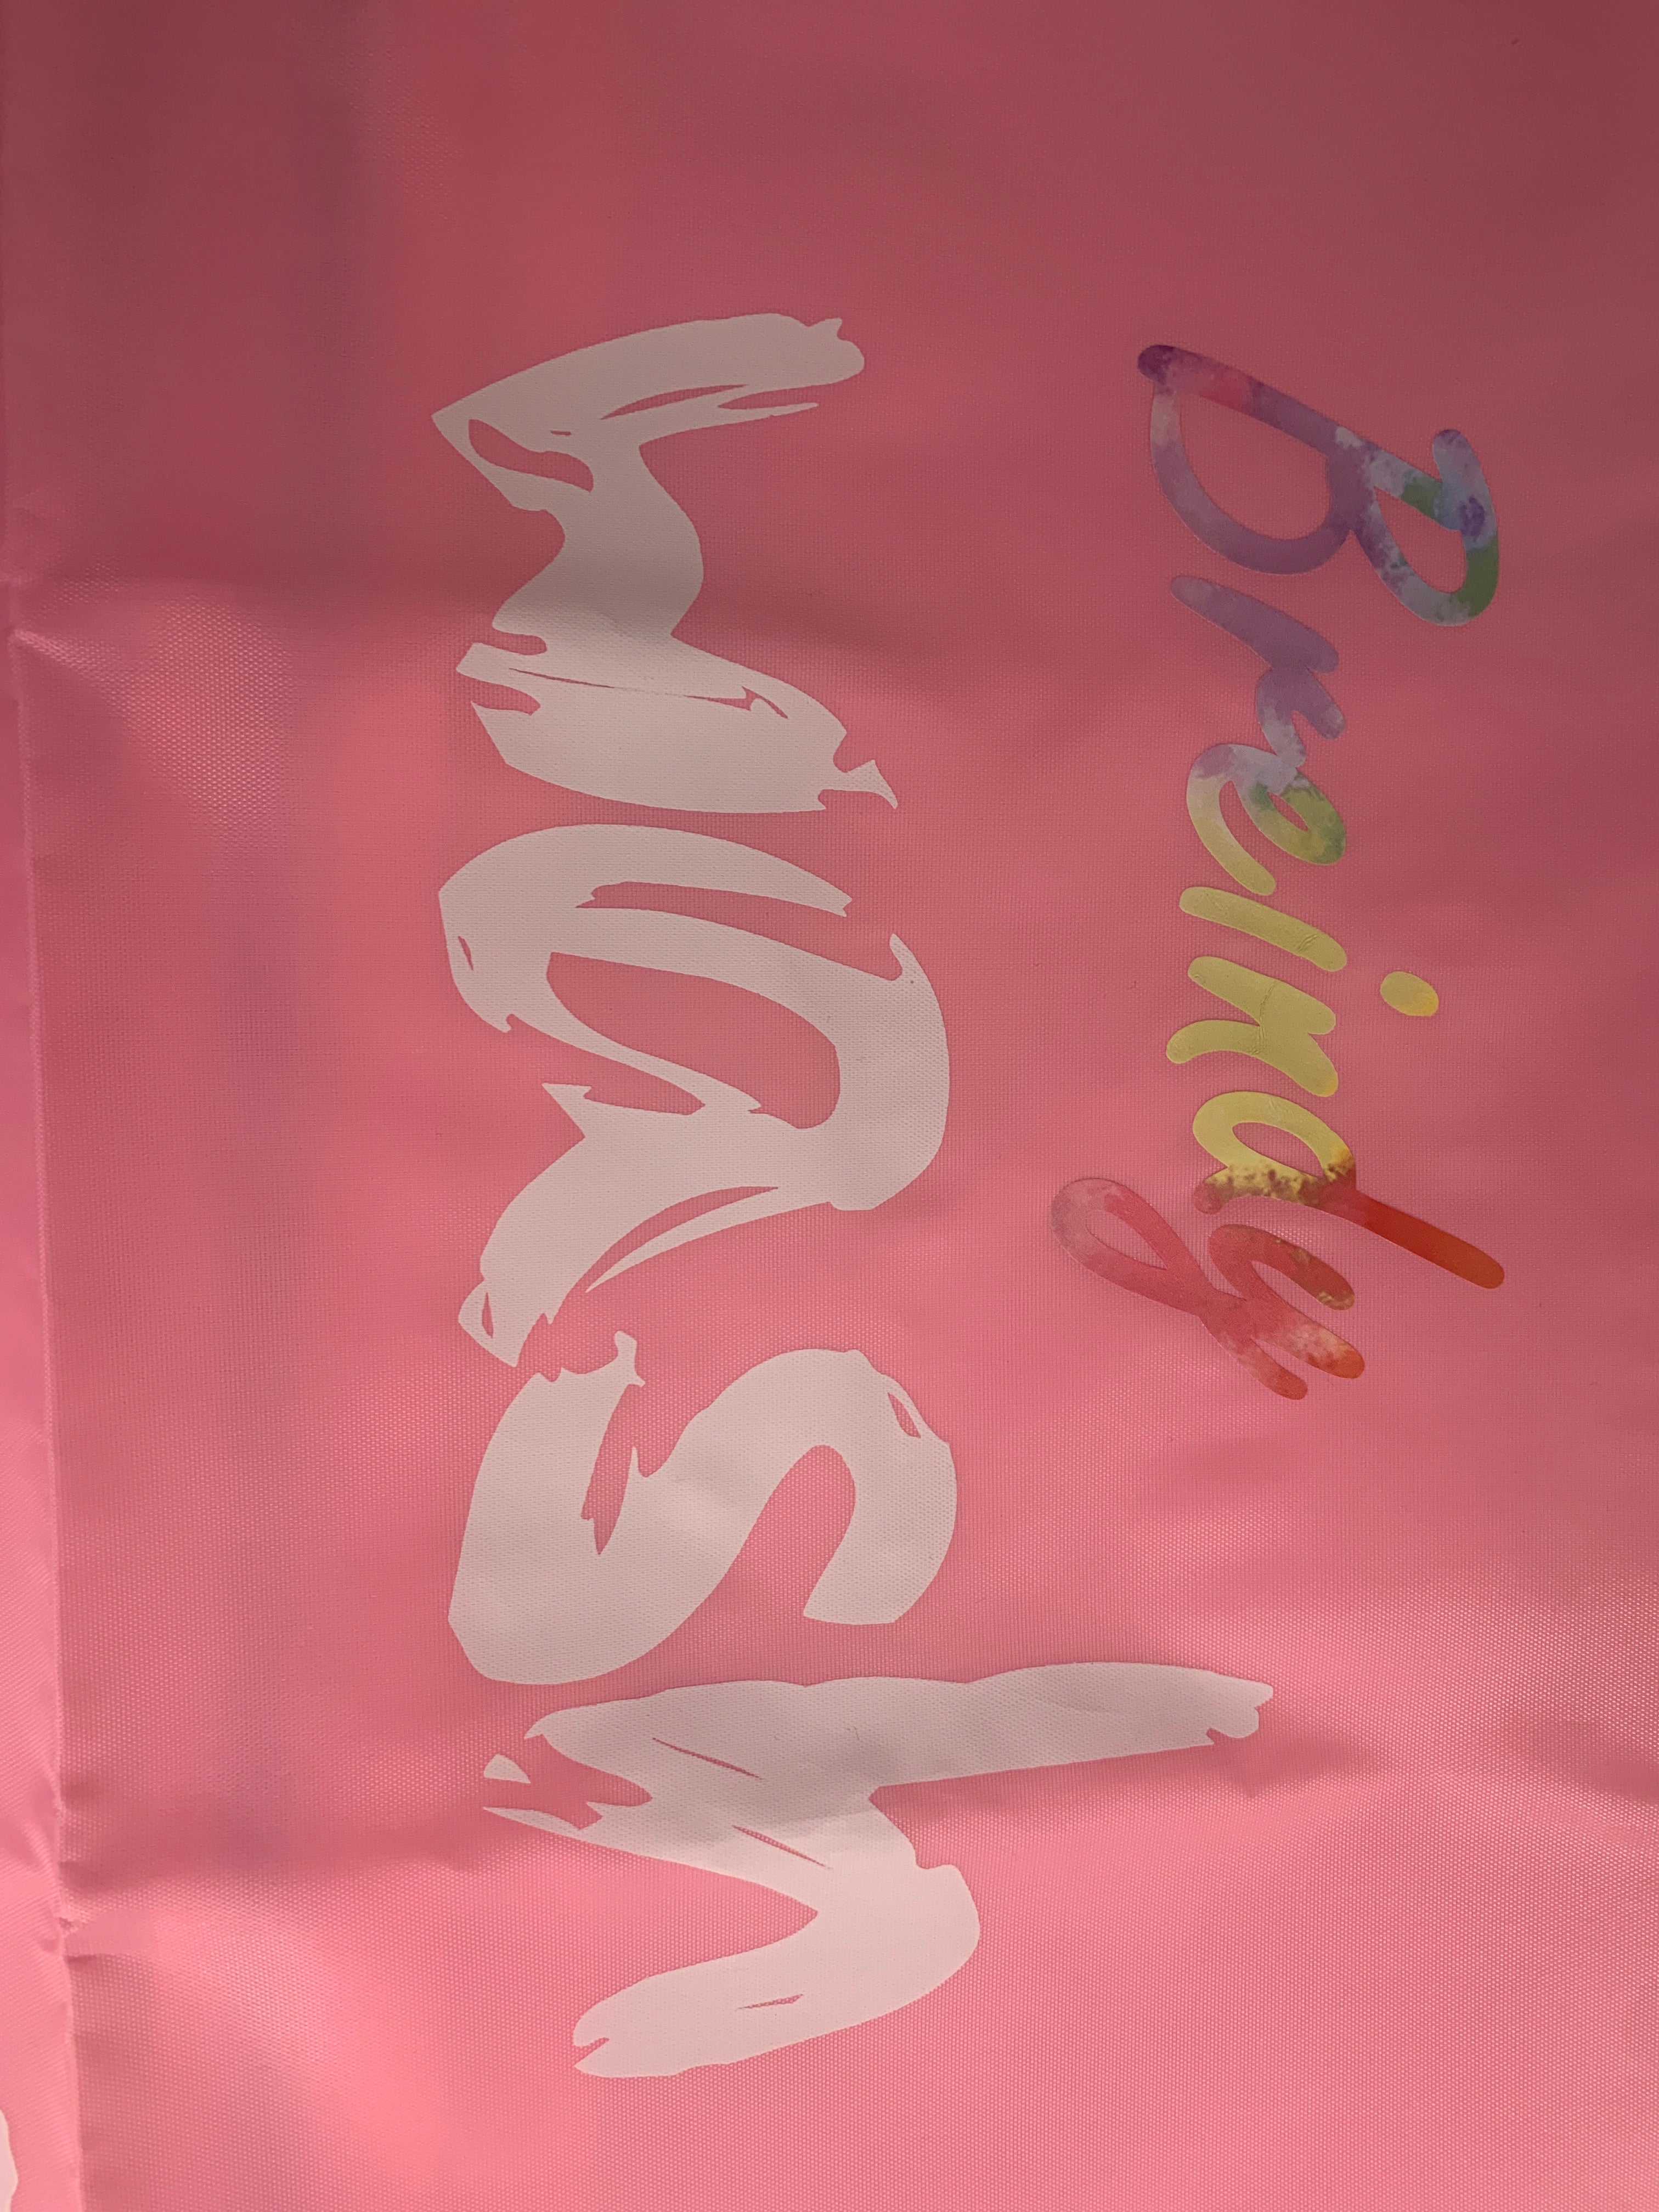 Camp Summer Laundry Bag adorable "Wash Me" design 3 colors girl/boy